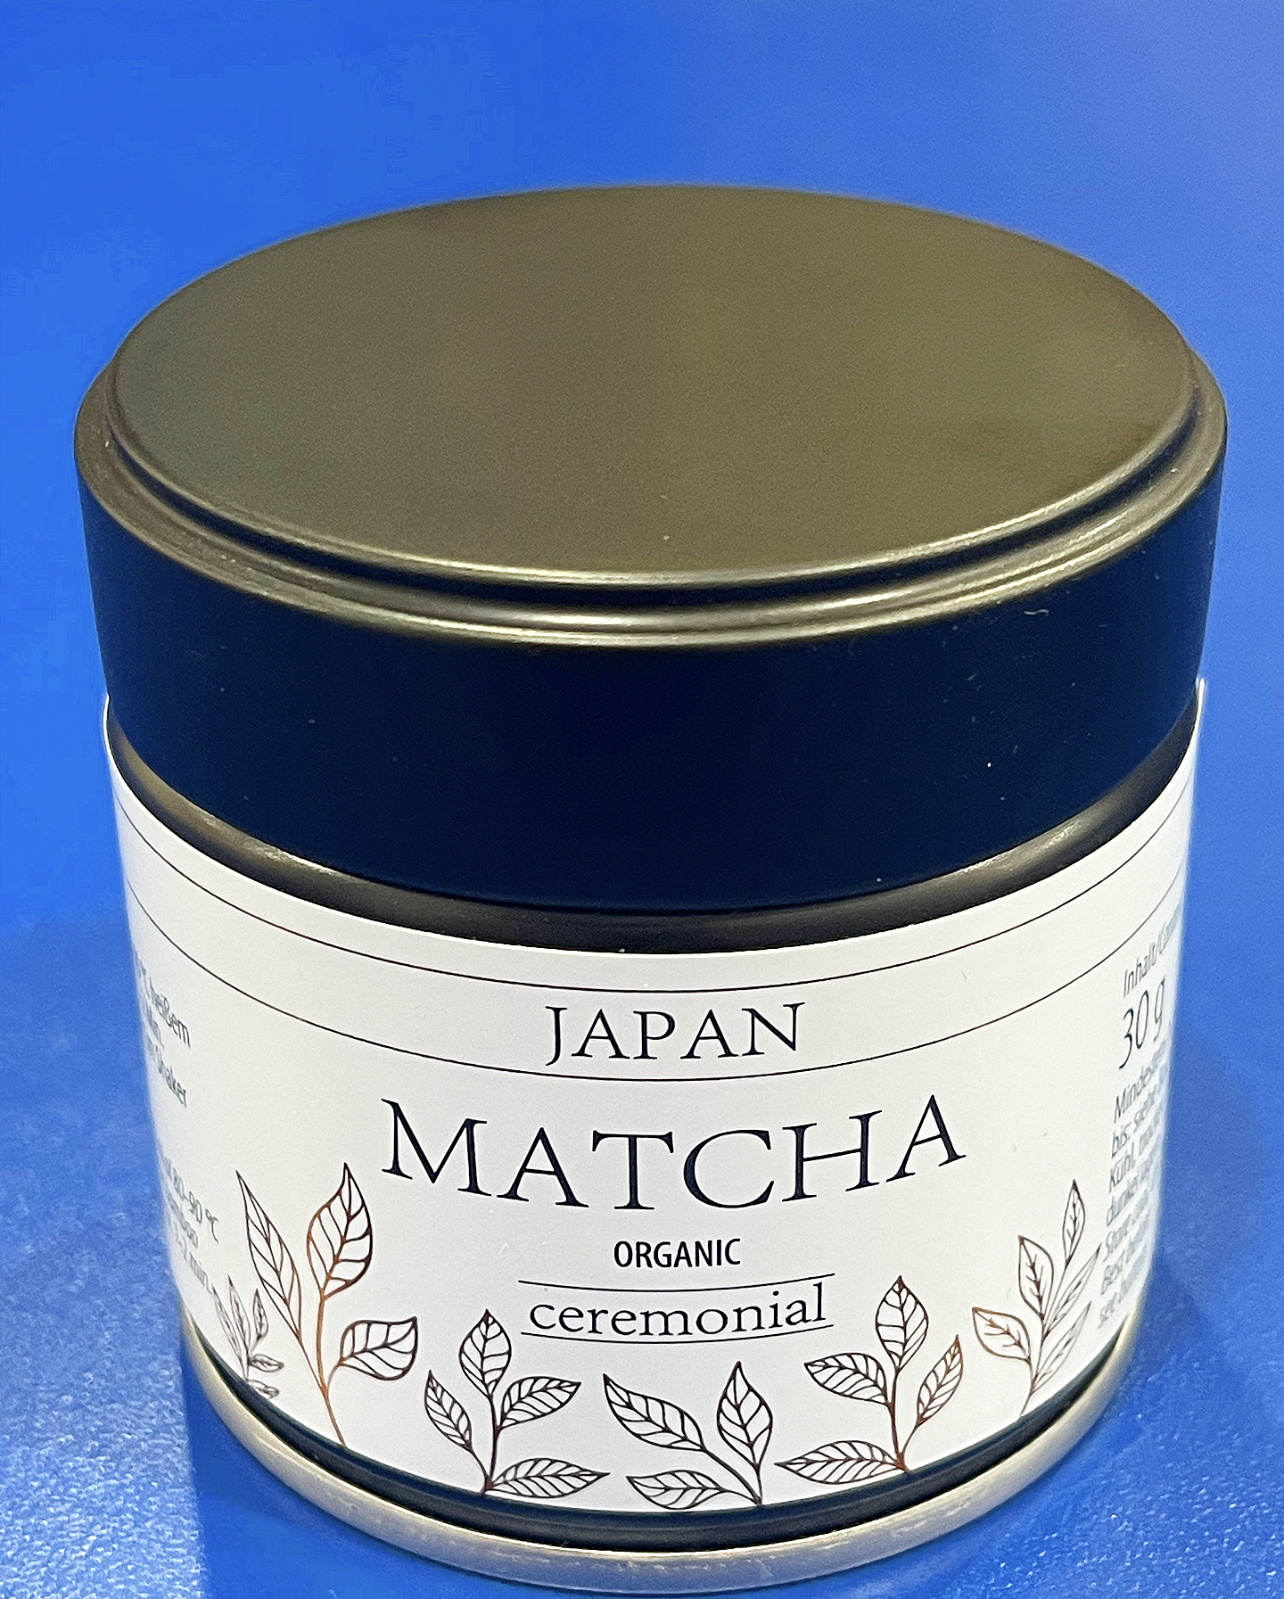 Japan Matcha Organic Ceremonial